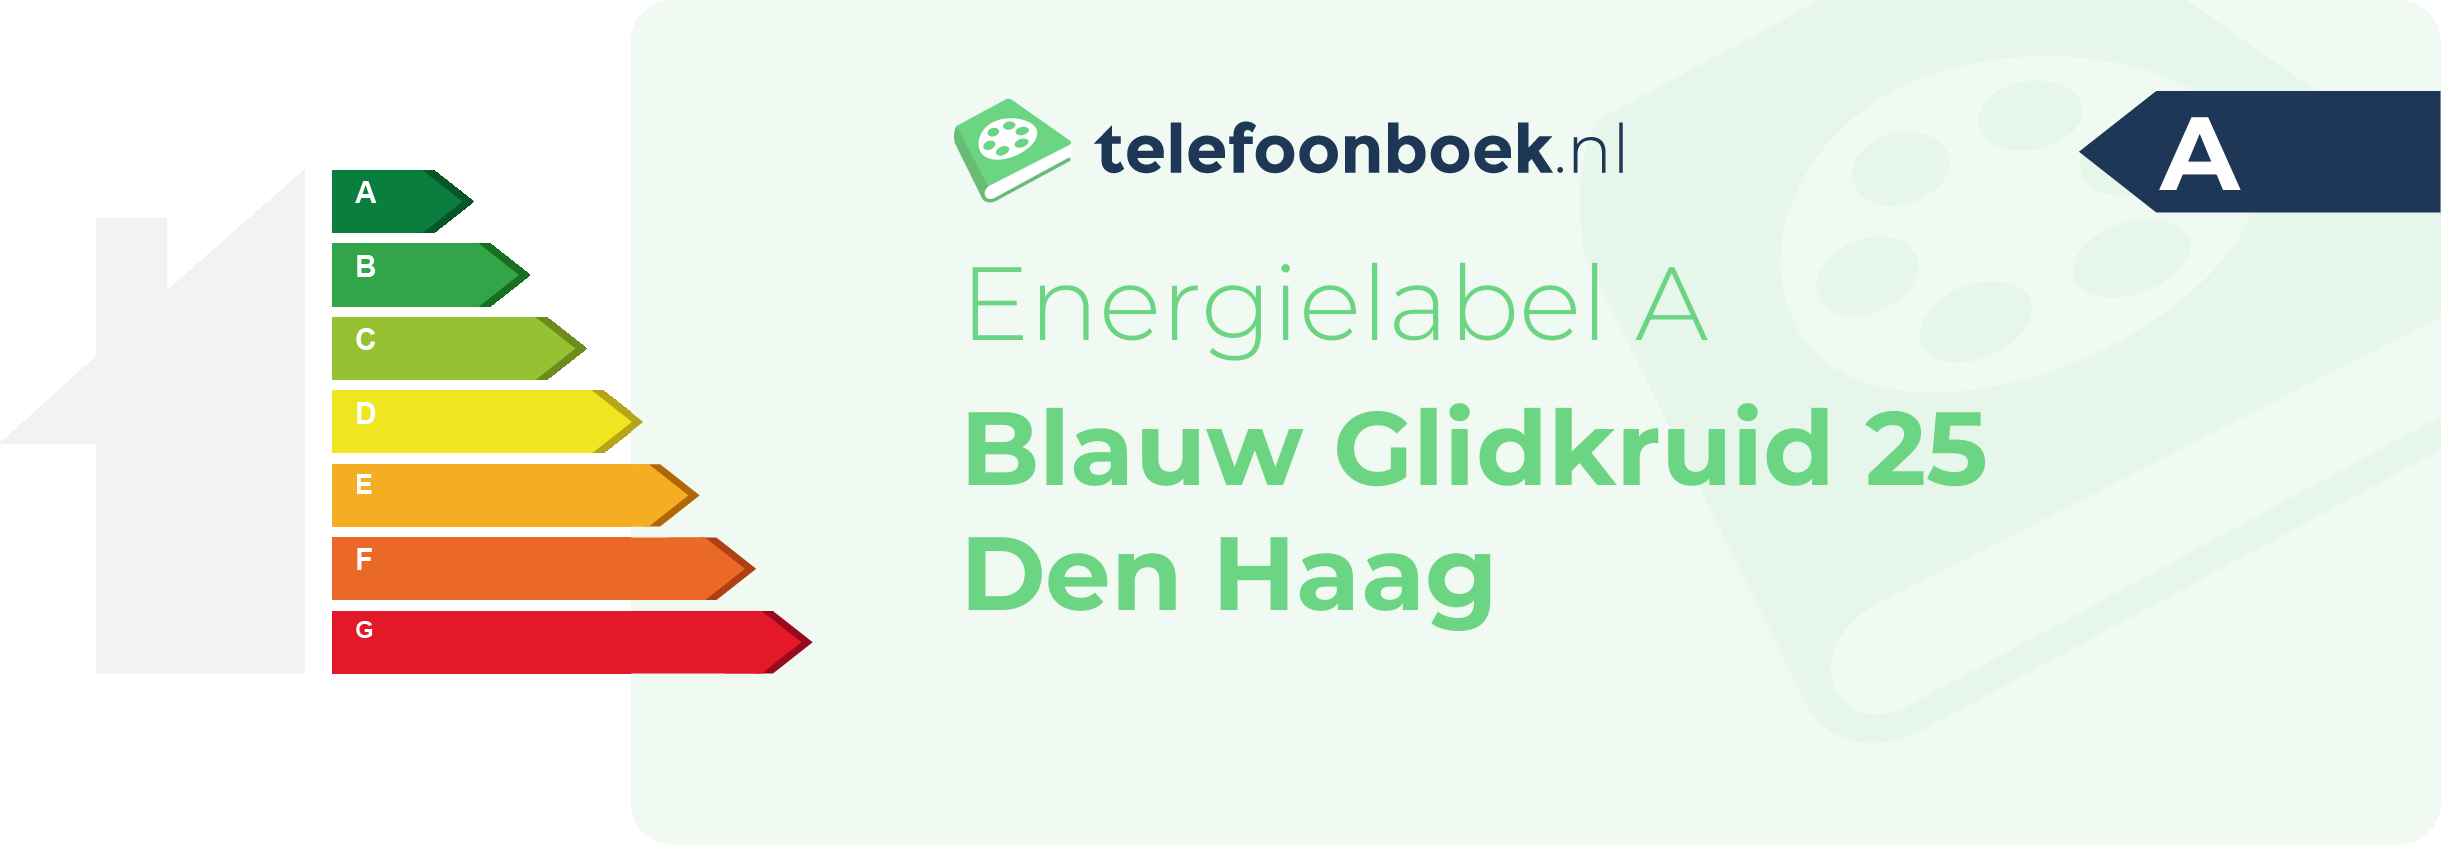 Energielabel Blauw Glidkruid 25 Den Haag